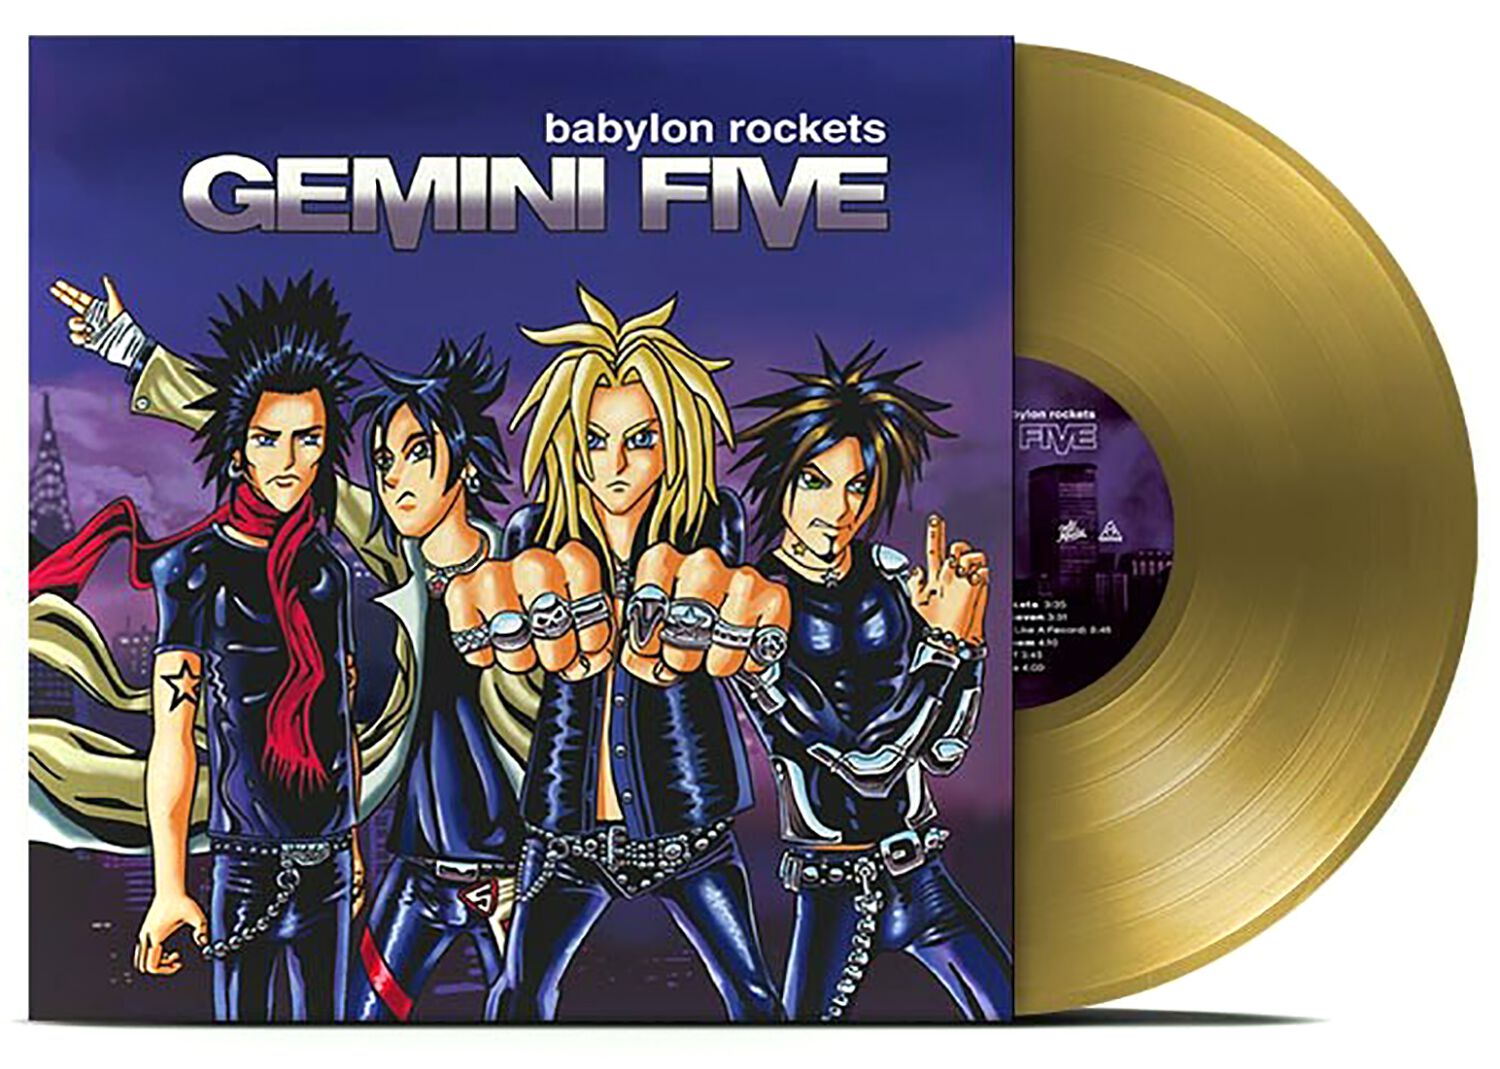 Gemini Five Babylon rockets LP gold coloured